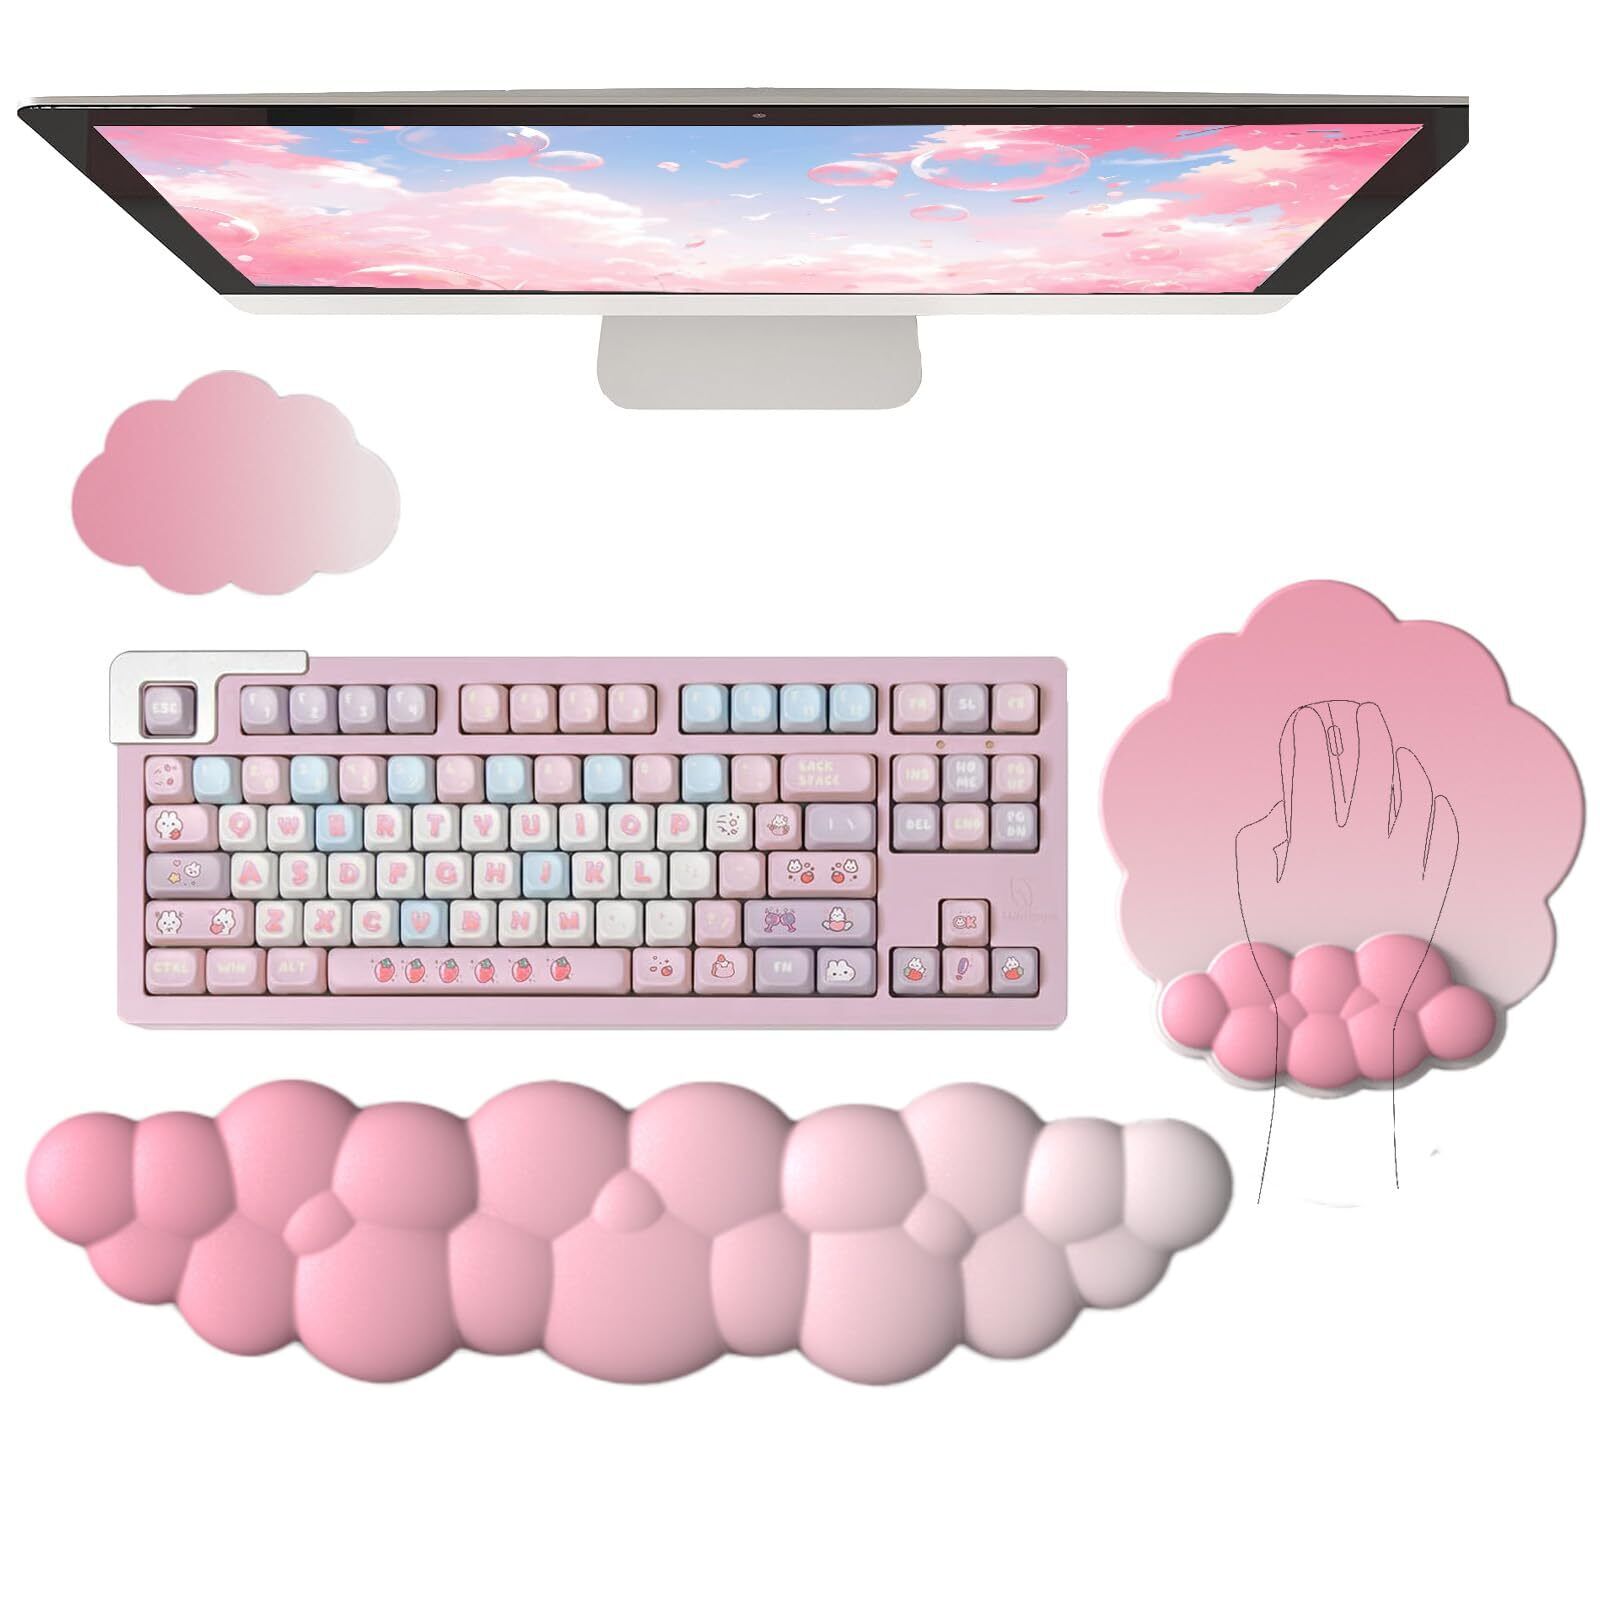 Cloud Wrist Rest Keyboard Pink Mouse Pad Set with Wrist Rest Ergonomic Wrist ...